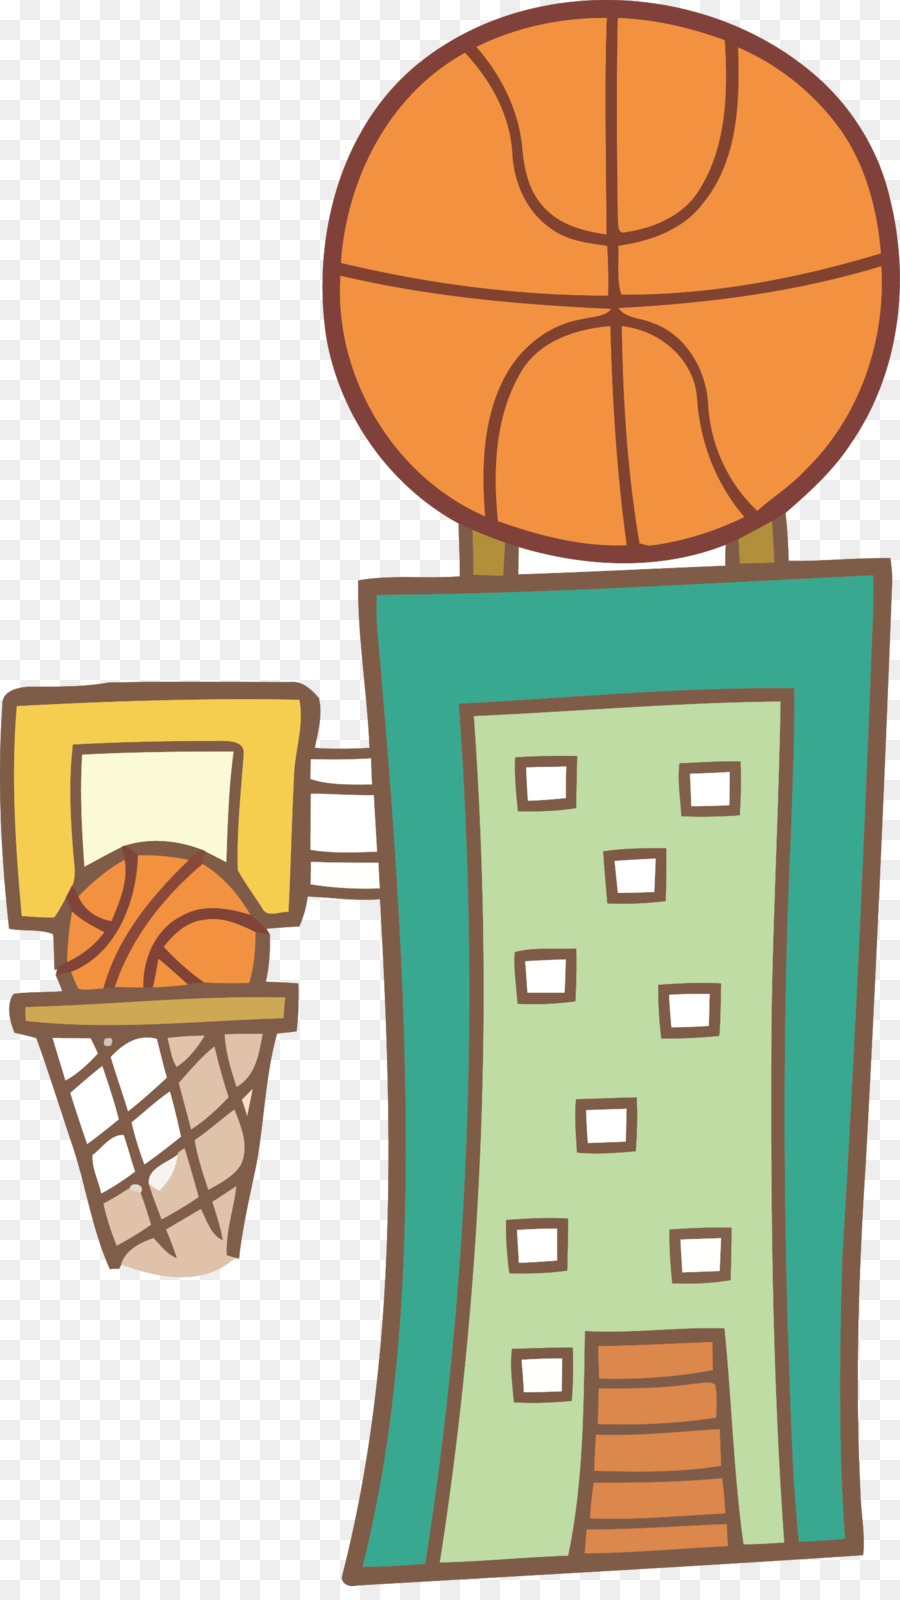 Clipart - Vektor-illustration der basketball-Halle